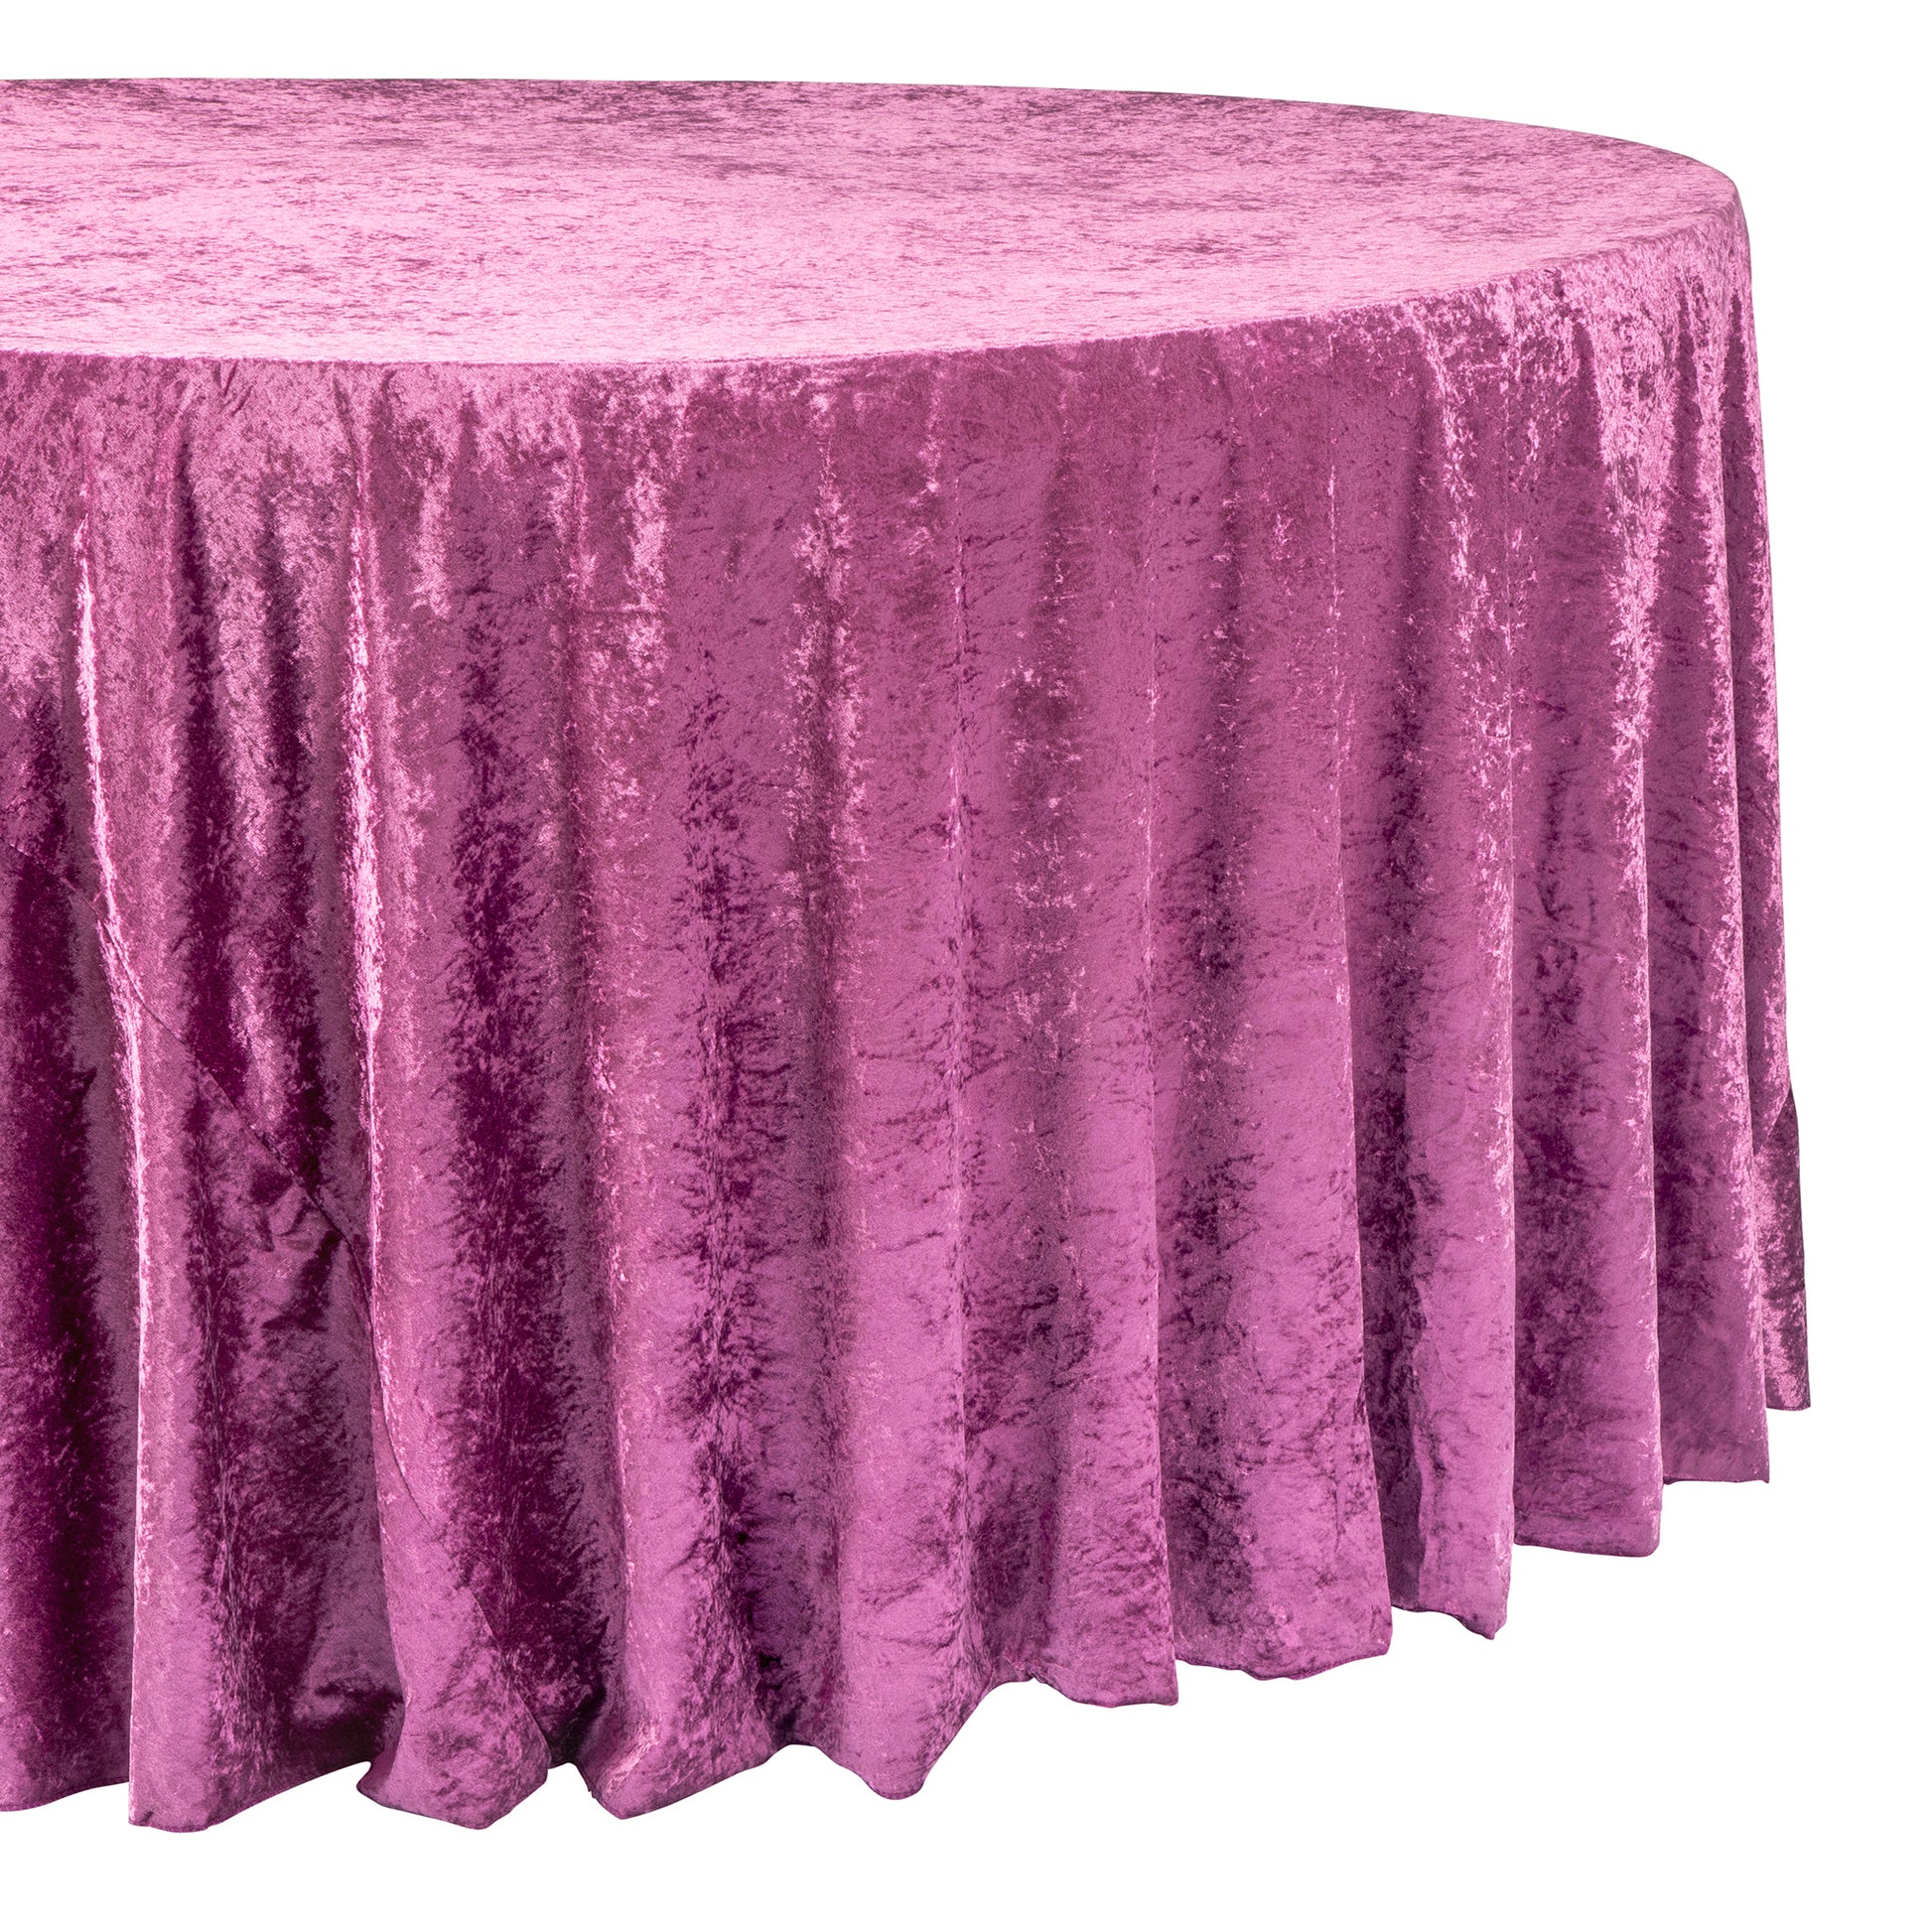 Velvet 132" Round Tablecloth - Violet